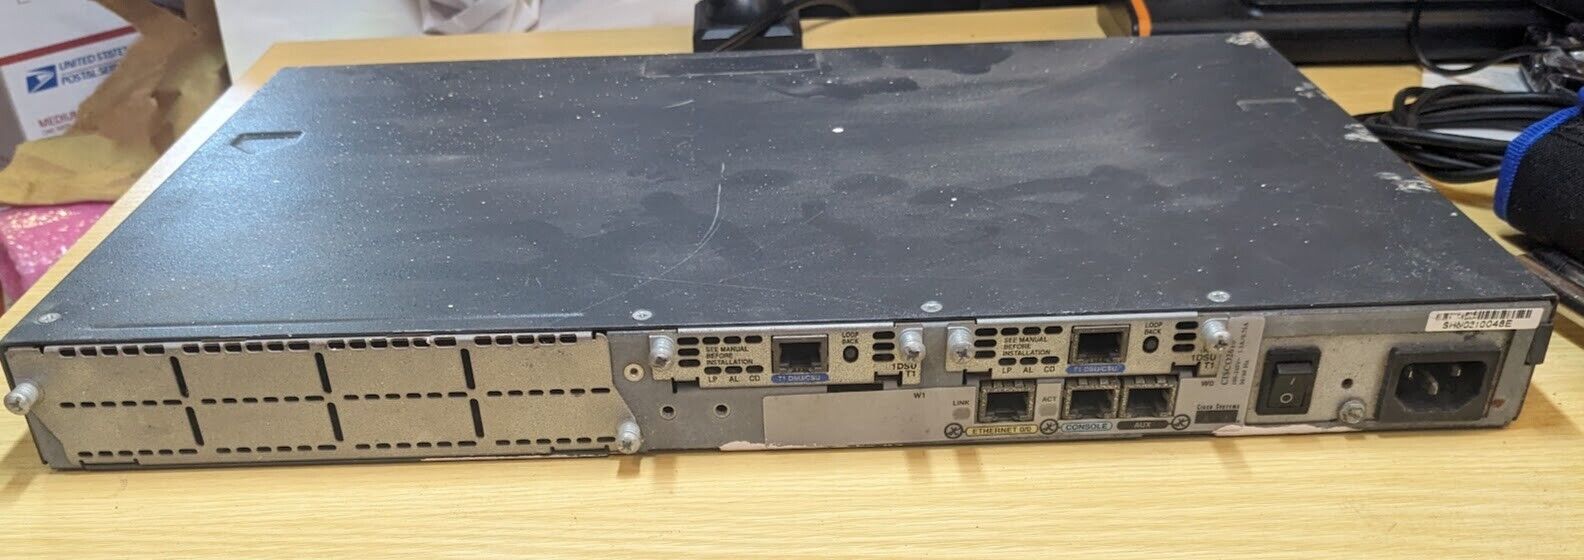 Cisco 2600 2610 Ethernet Modular Router w/ 1x WIC-1DSU-T1 - Works.  Case Damage.